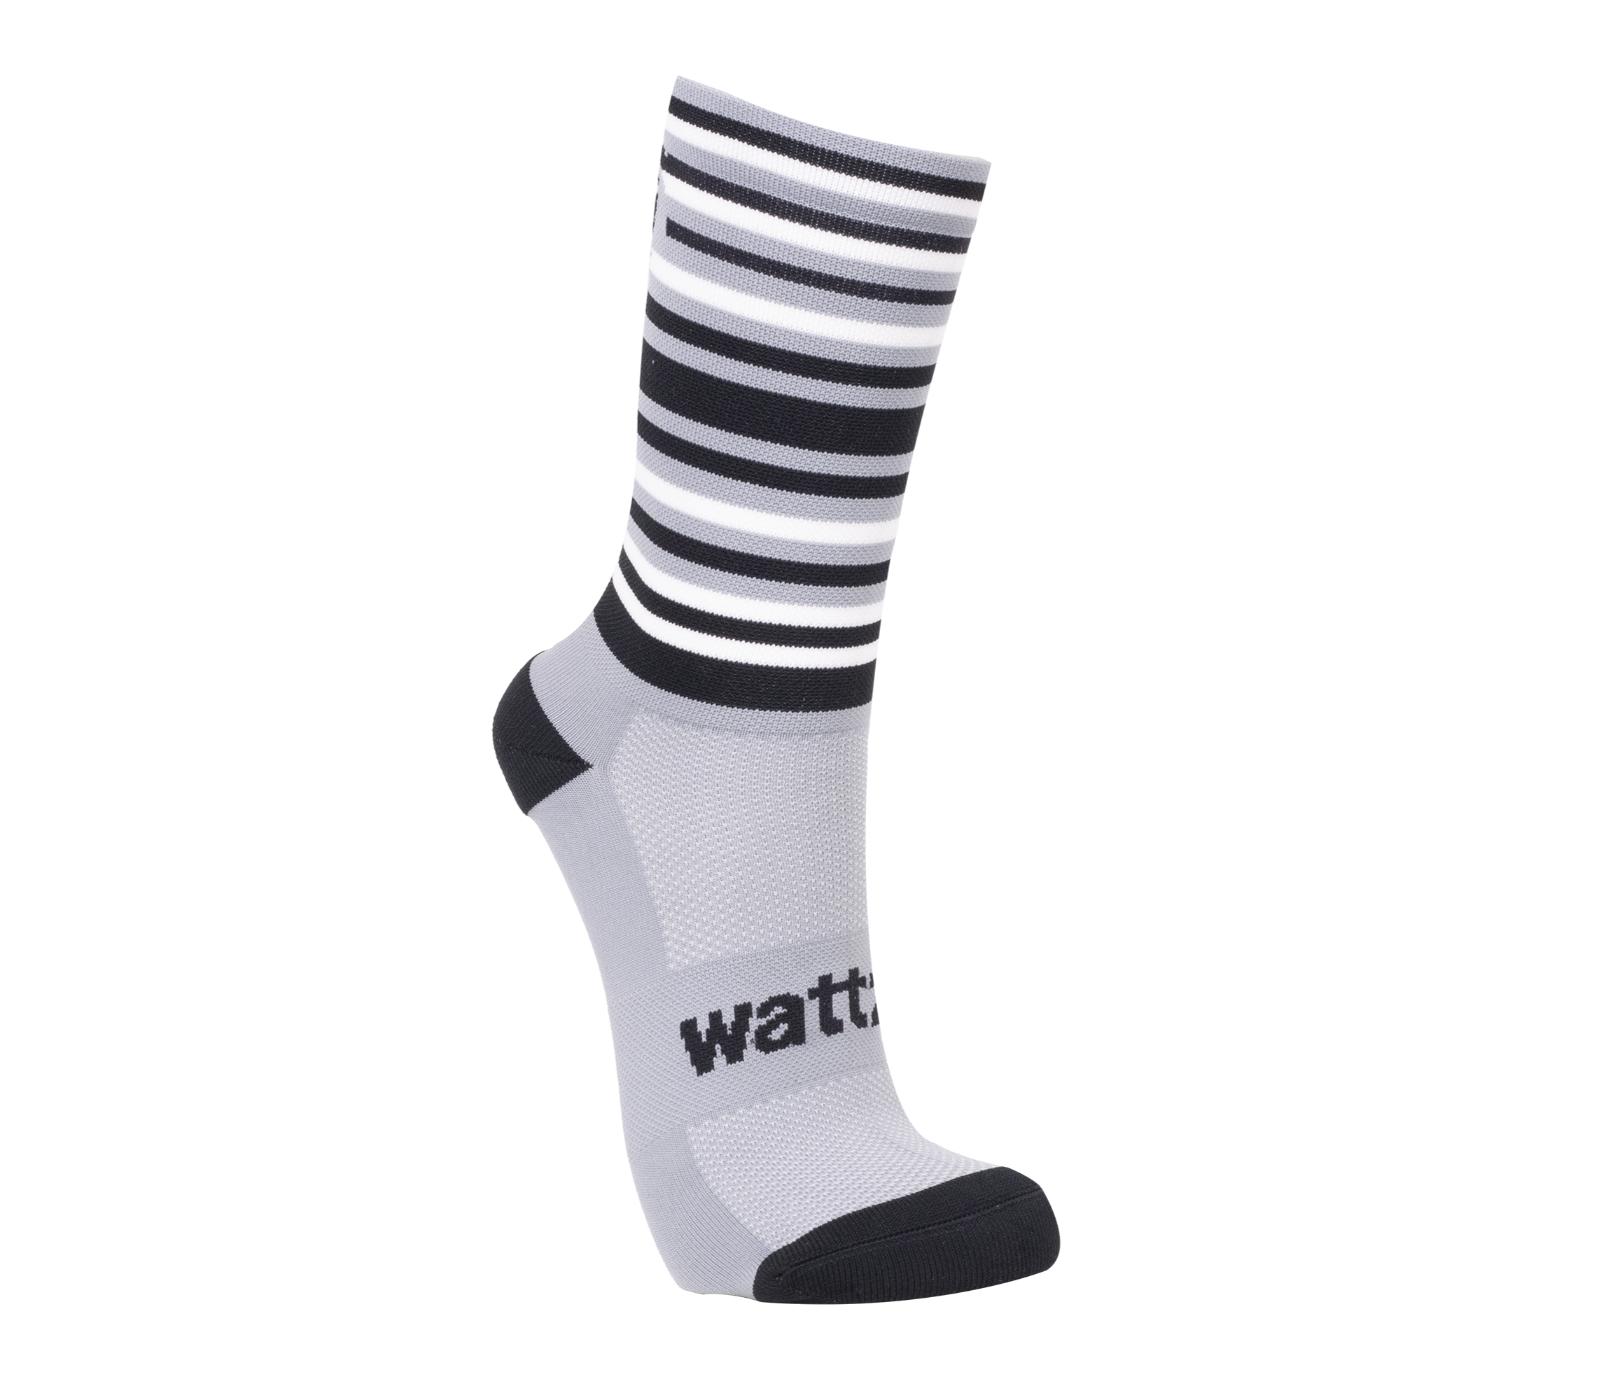 Wattz Knit Grey/White Men's Socks